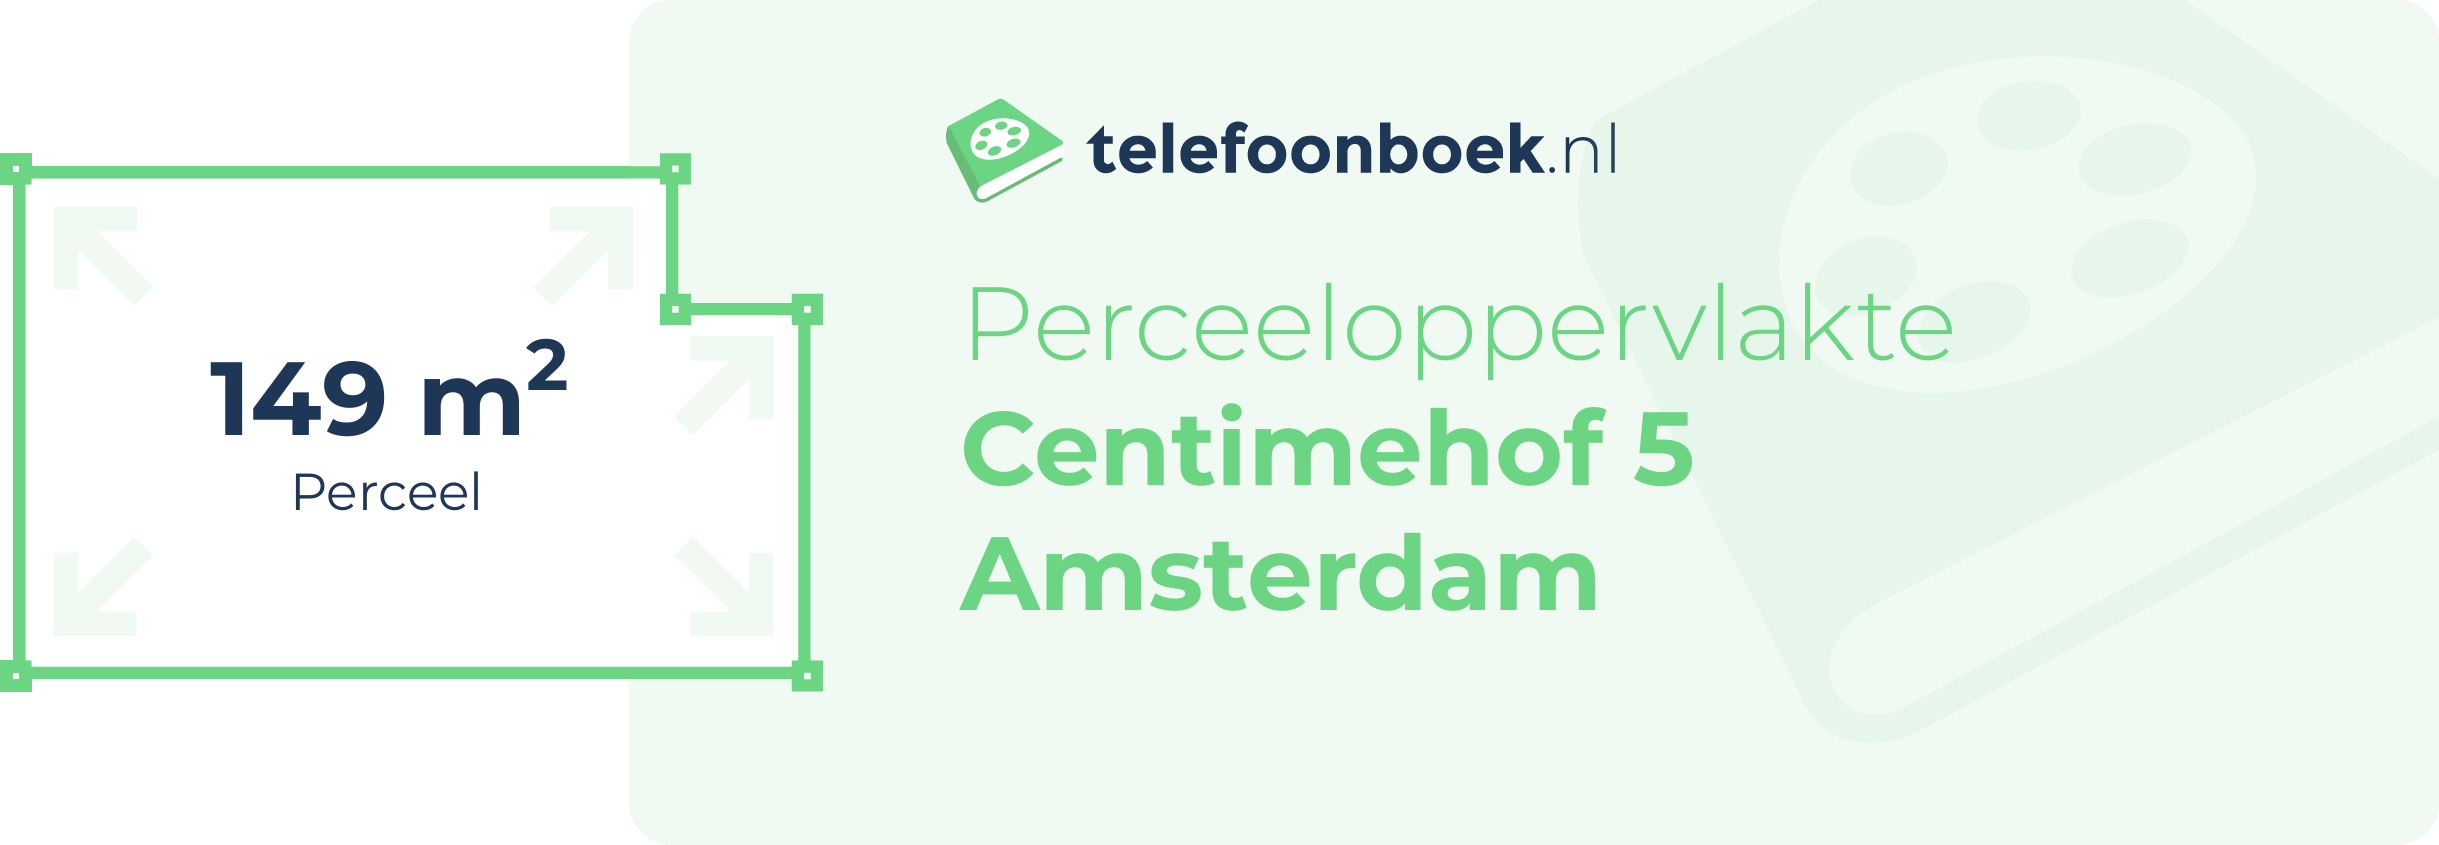 Perceeloppervlakte Centimehof 5 Amsterdam